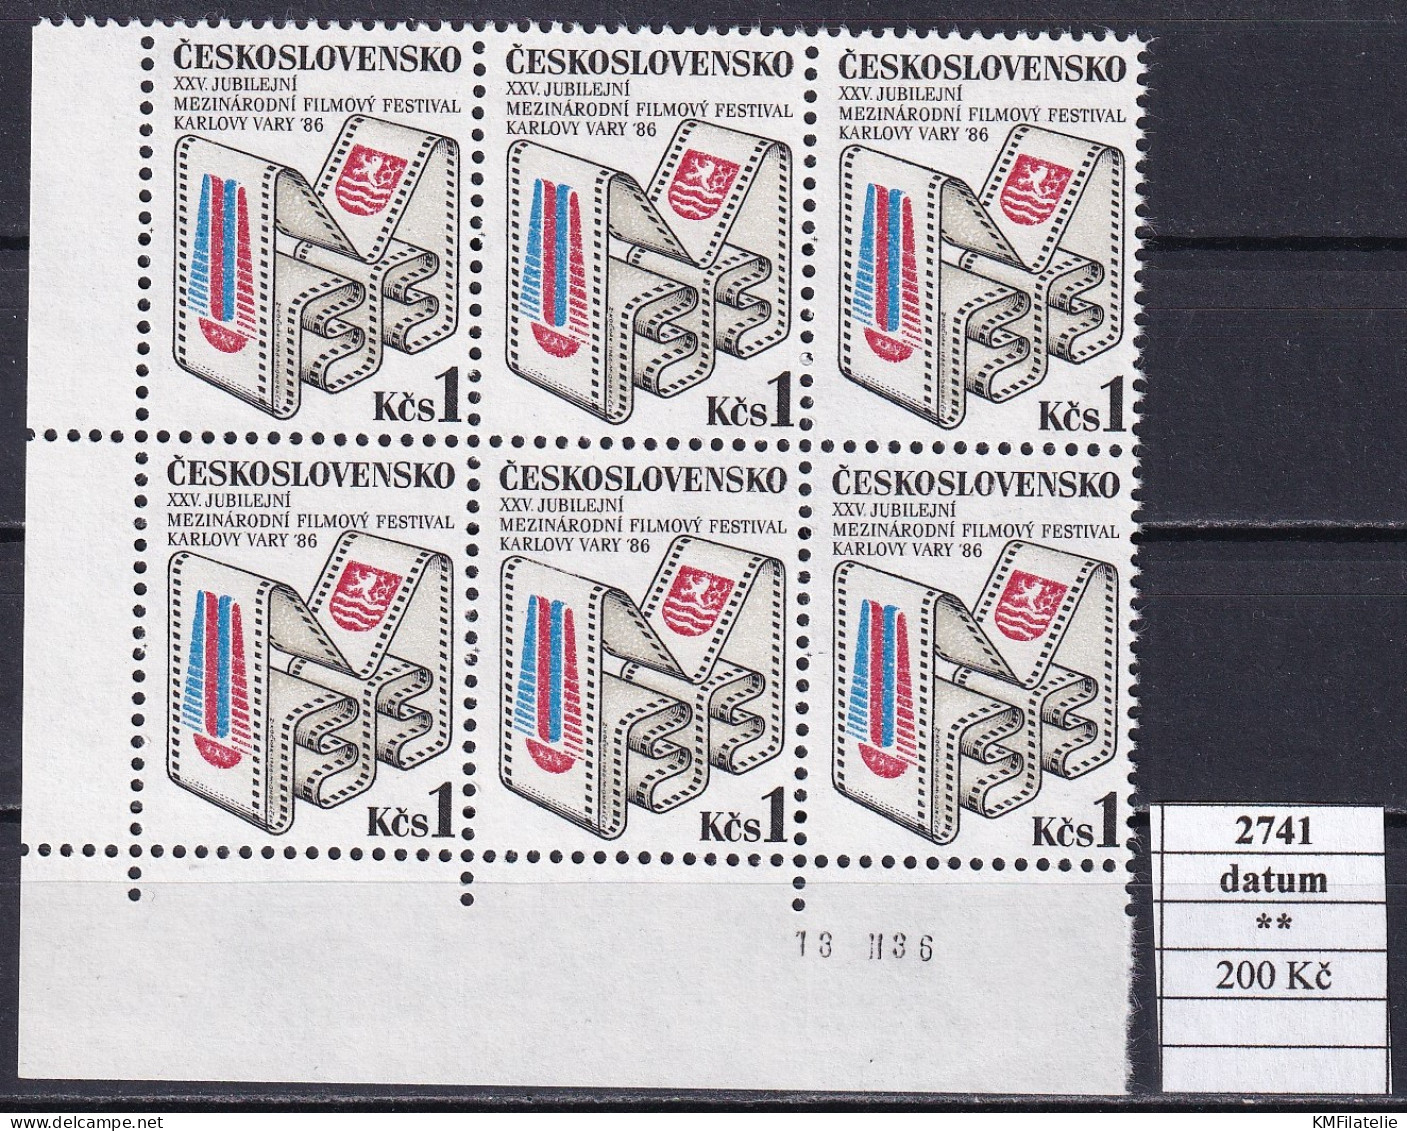 Czechoslovakia Pofis 2741 Print Date MNH - Unused Stamps